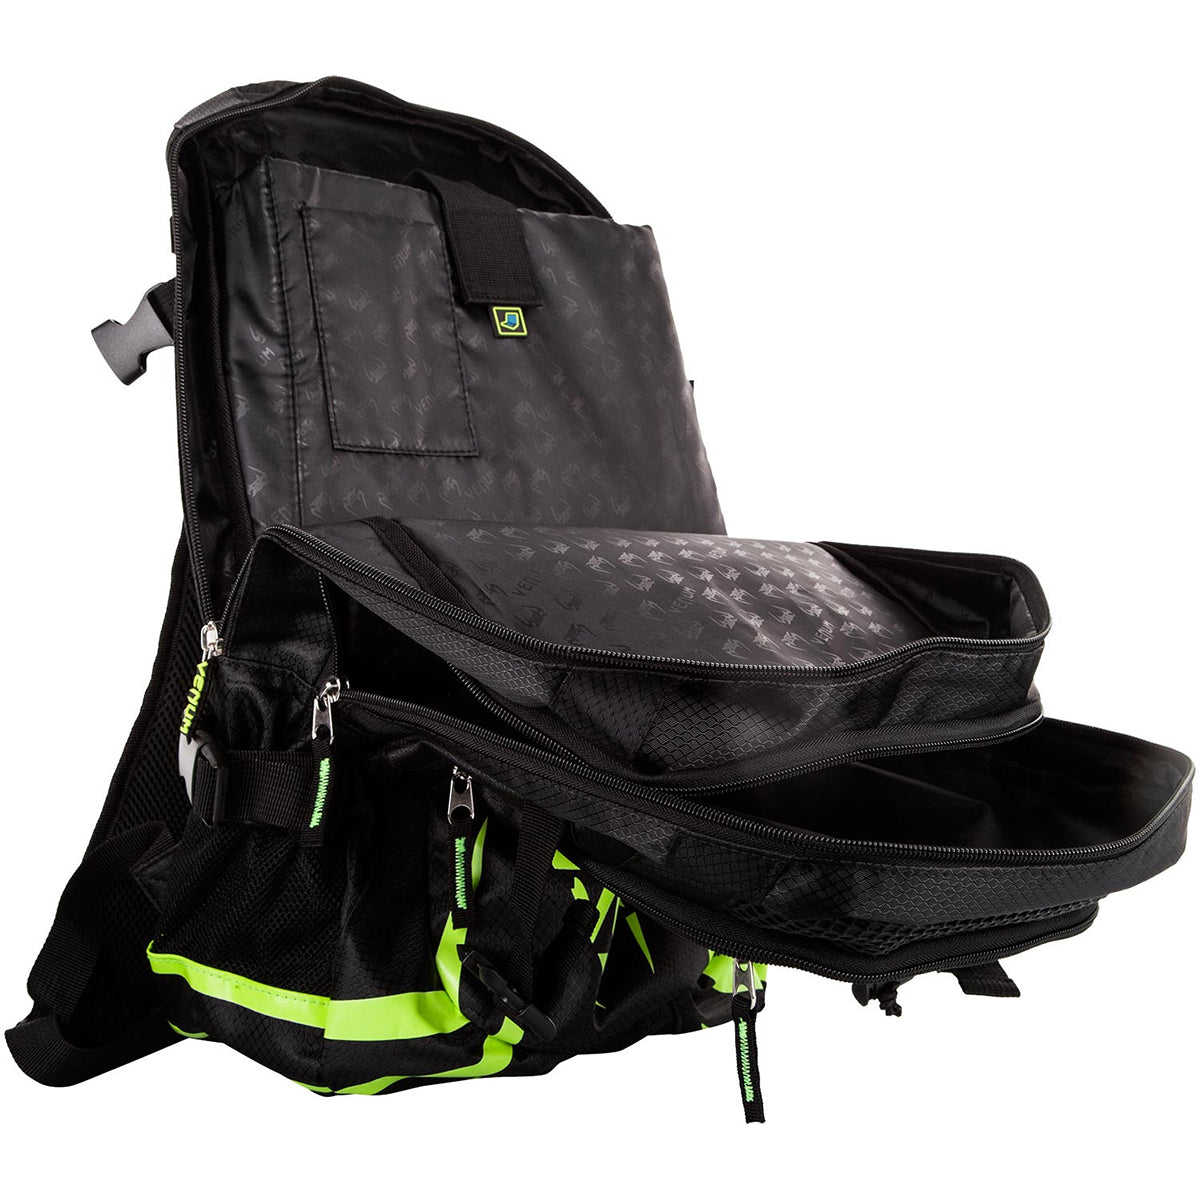 Venum Challenger Pro Backpack - Black/Neon Yellow Venum